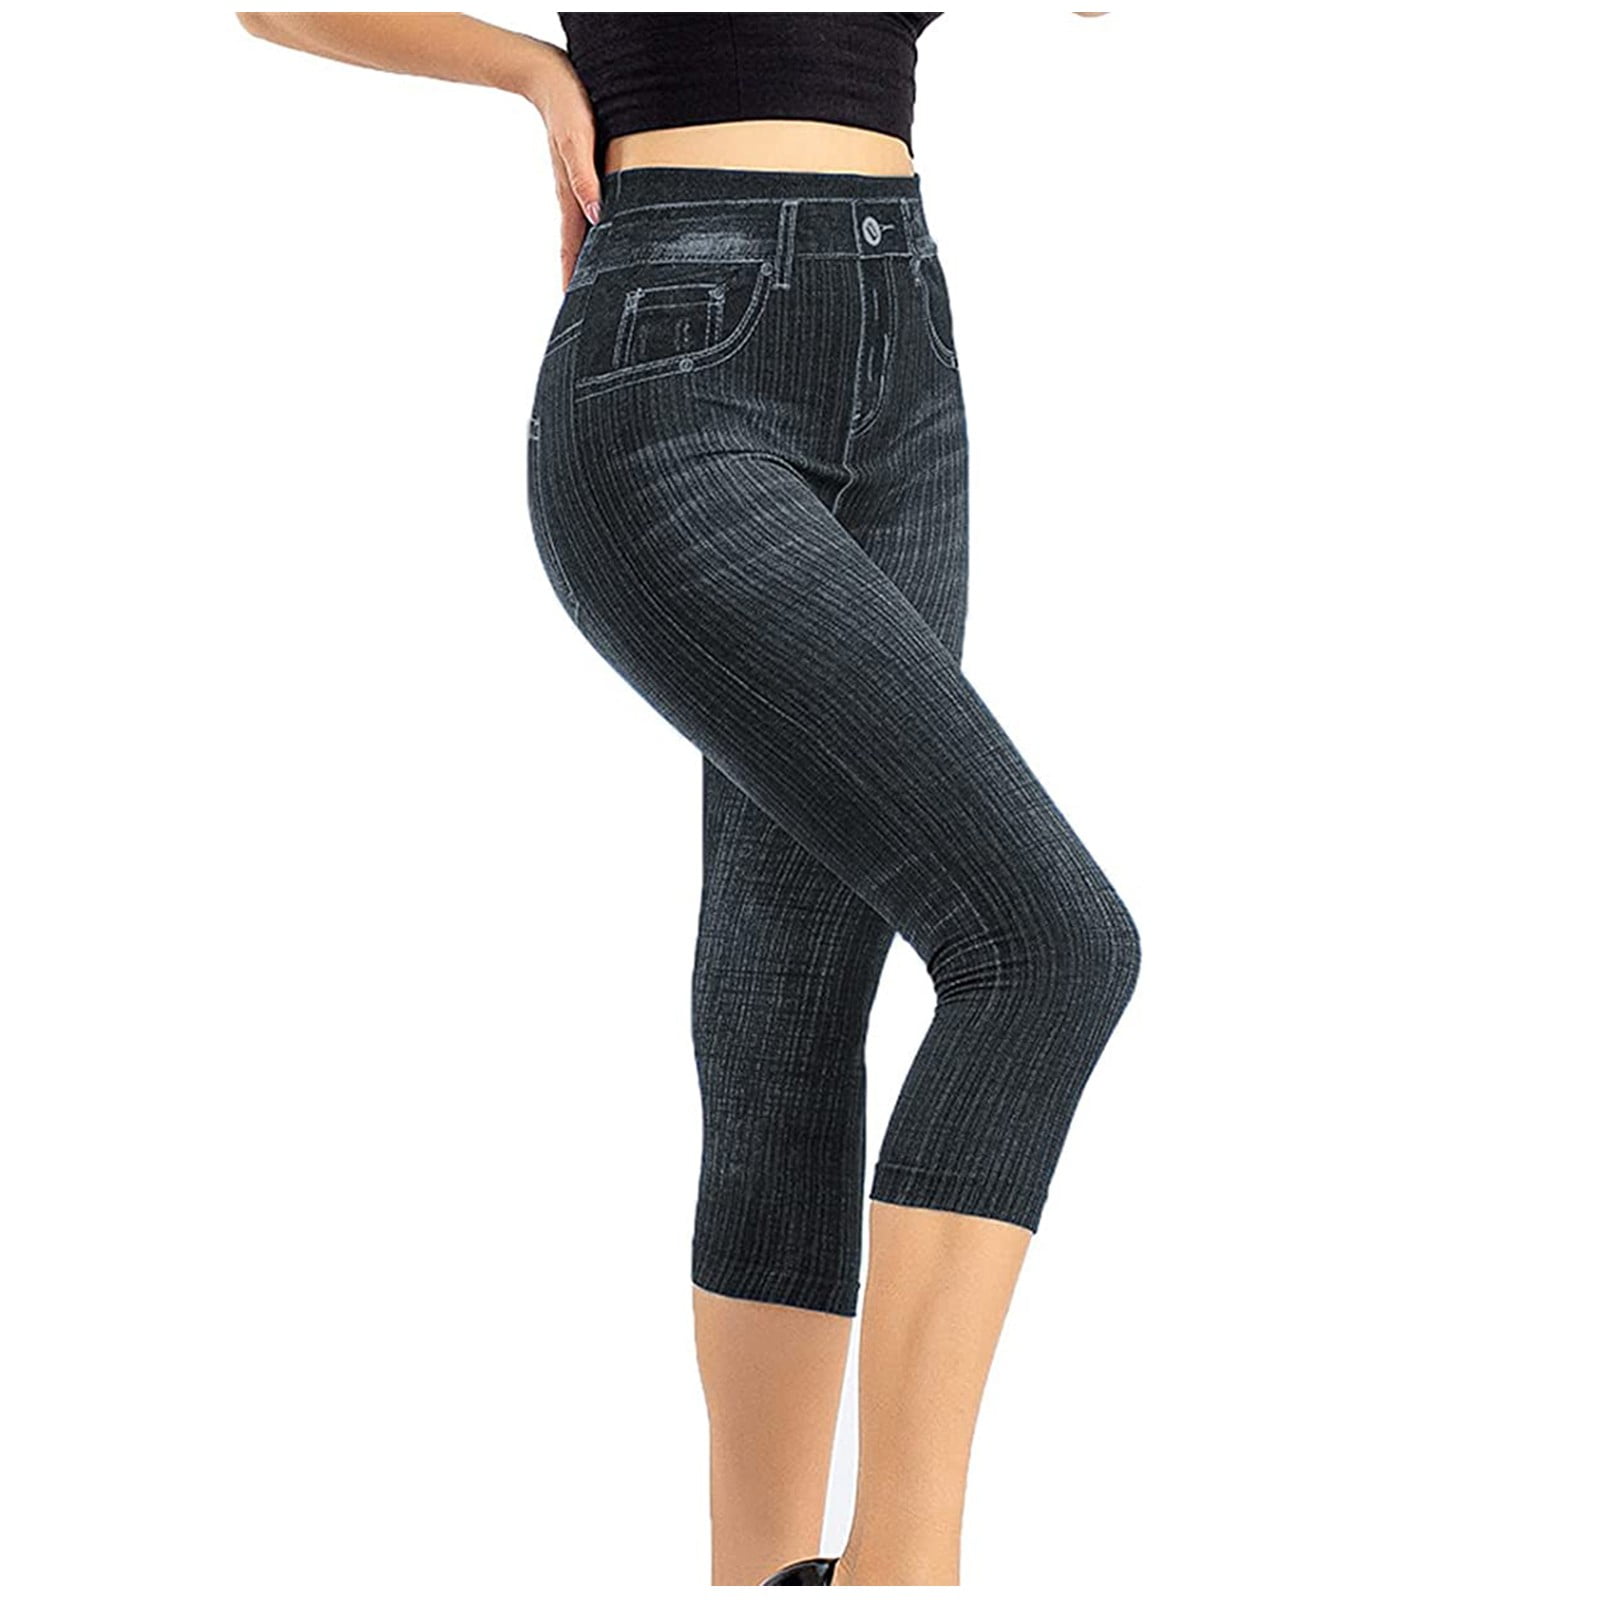 vbnergoie Women's Capris Imitation Jeans Leggings High Waist